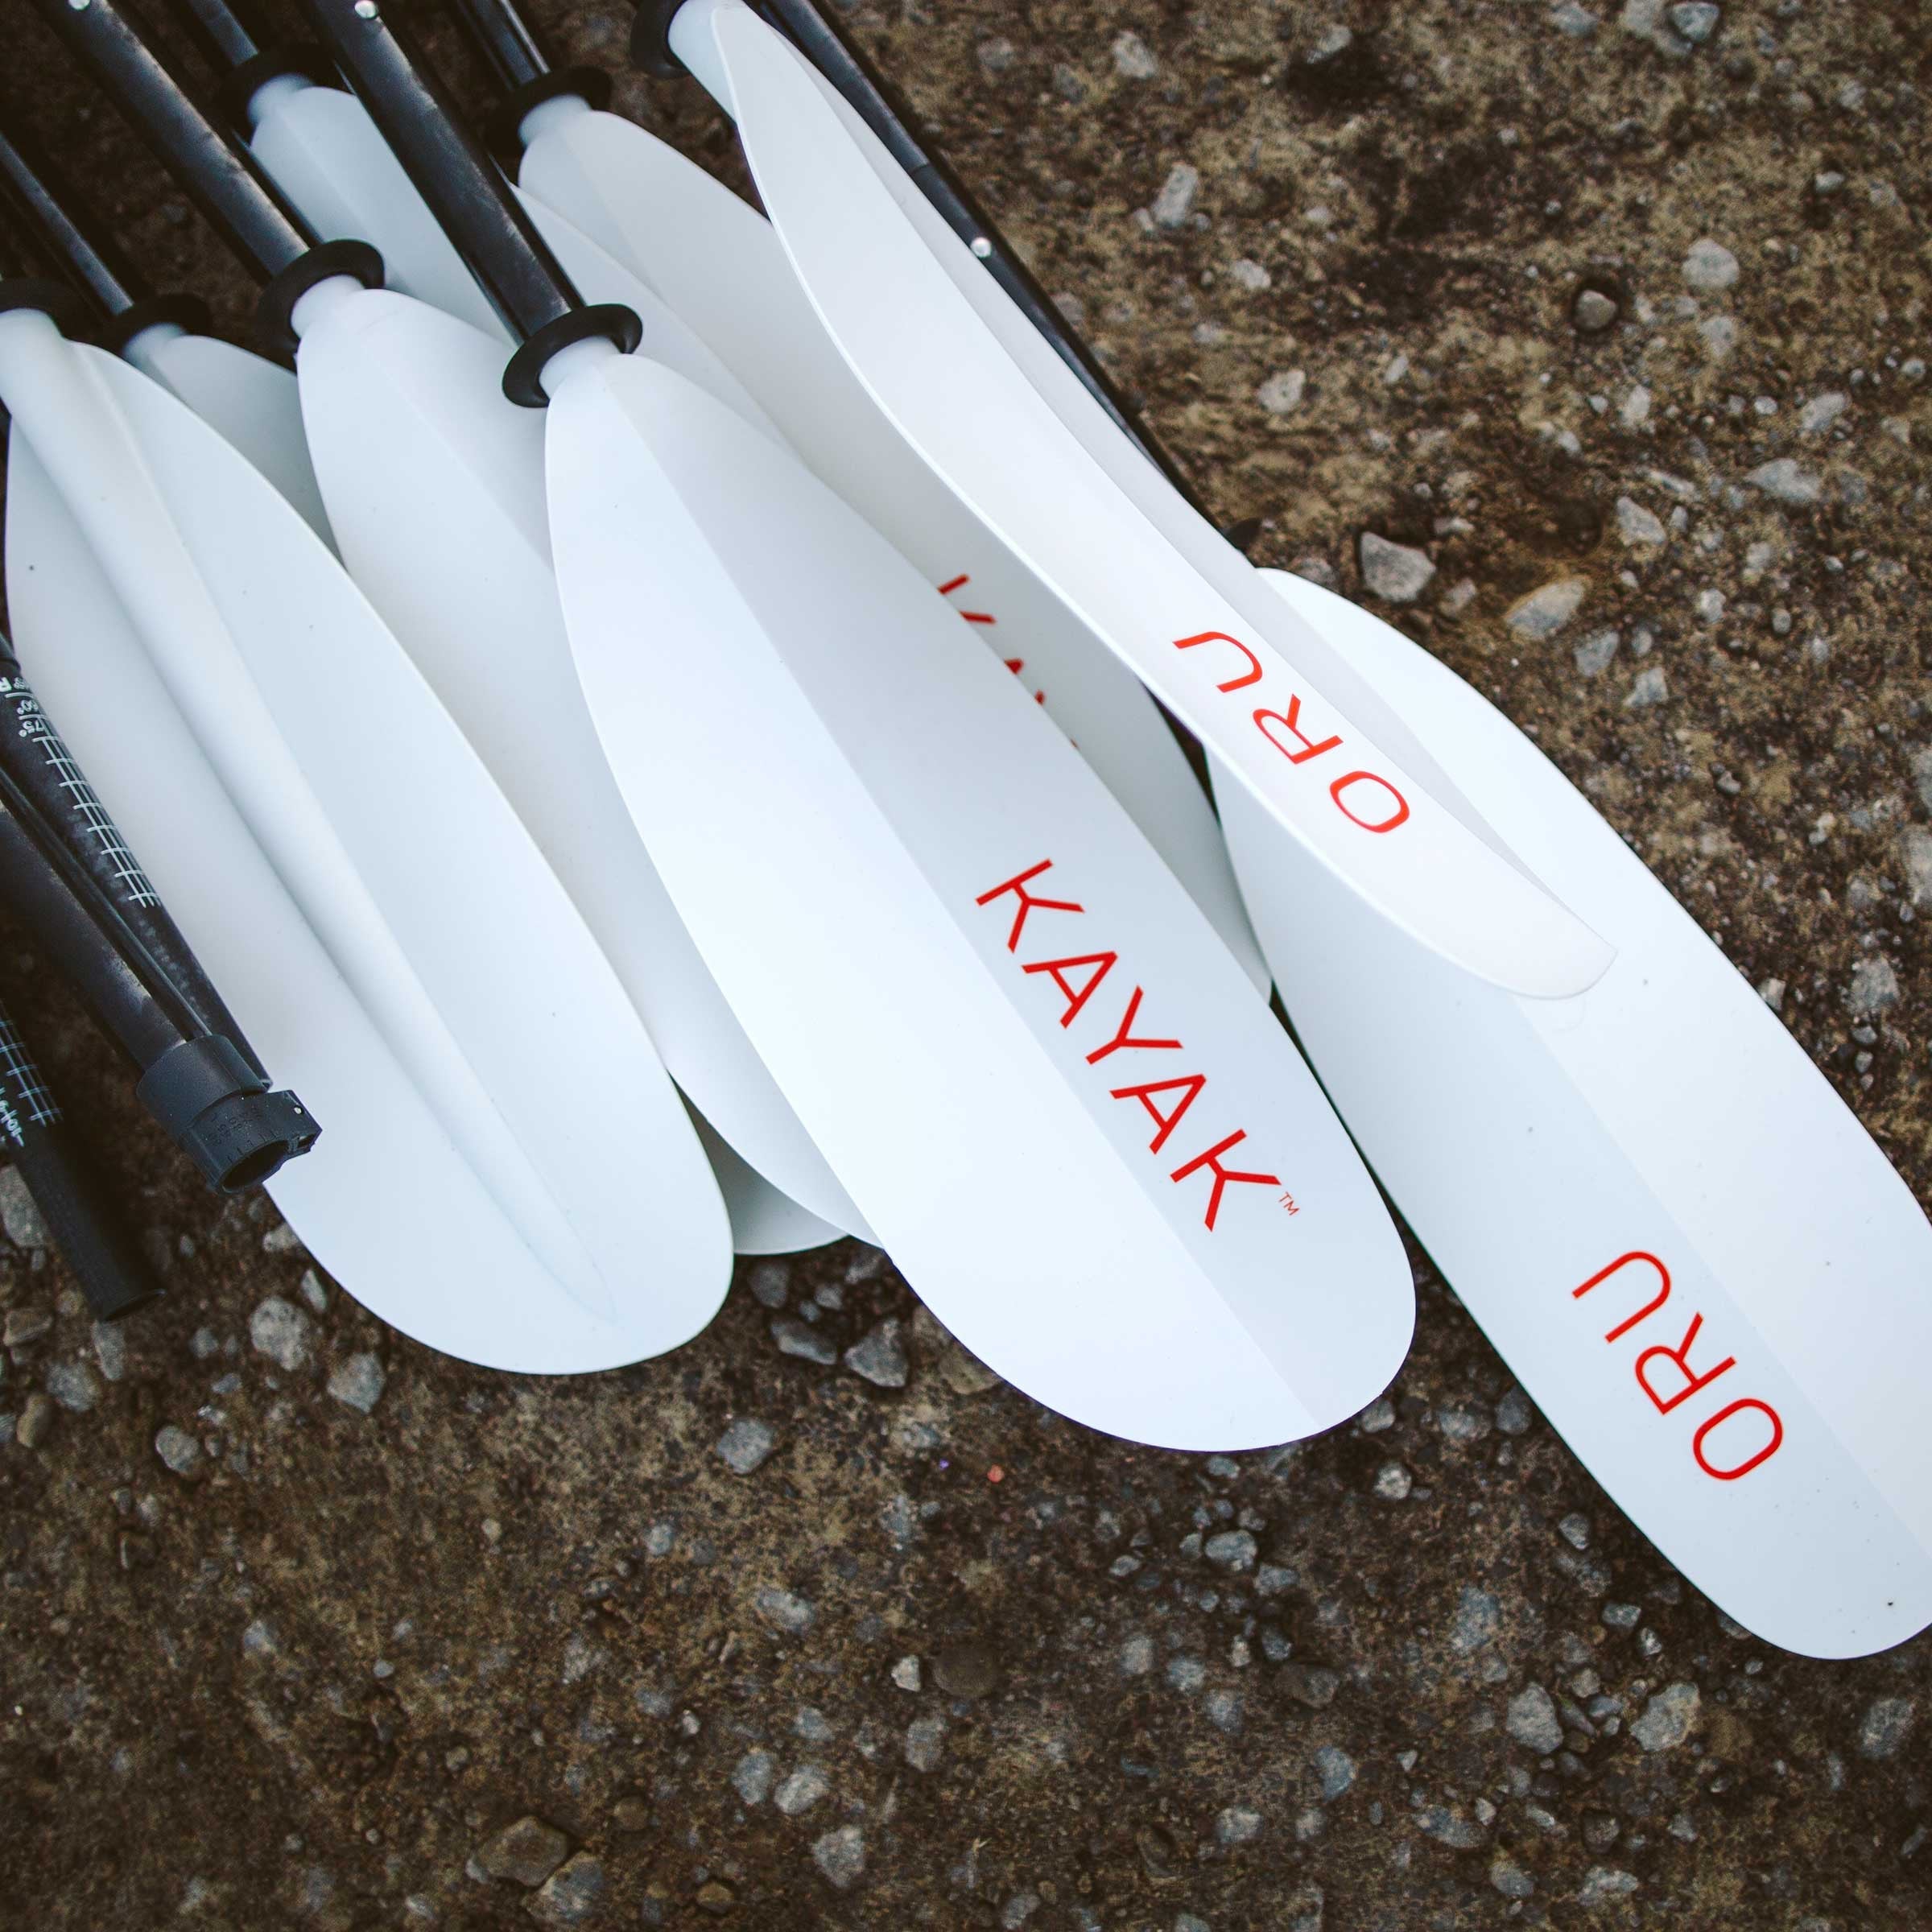 Oru Paddle - Adjustable 4 piece Fiberglass lightweight paddle (2.75 lbs)